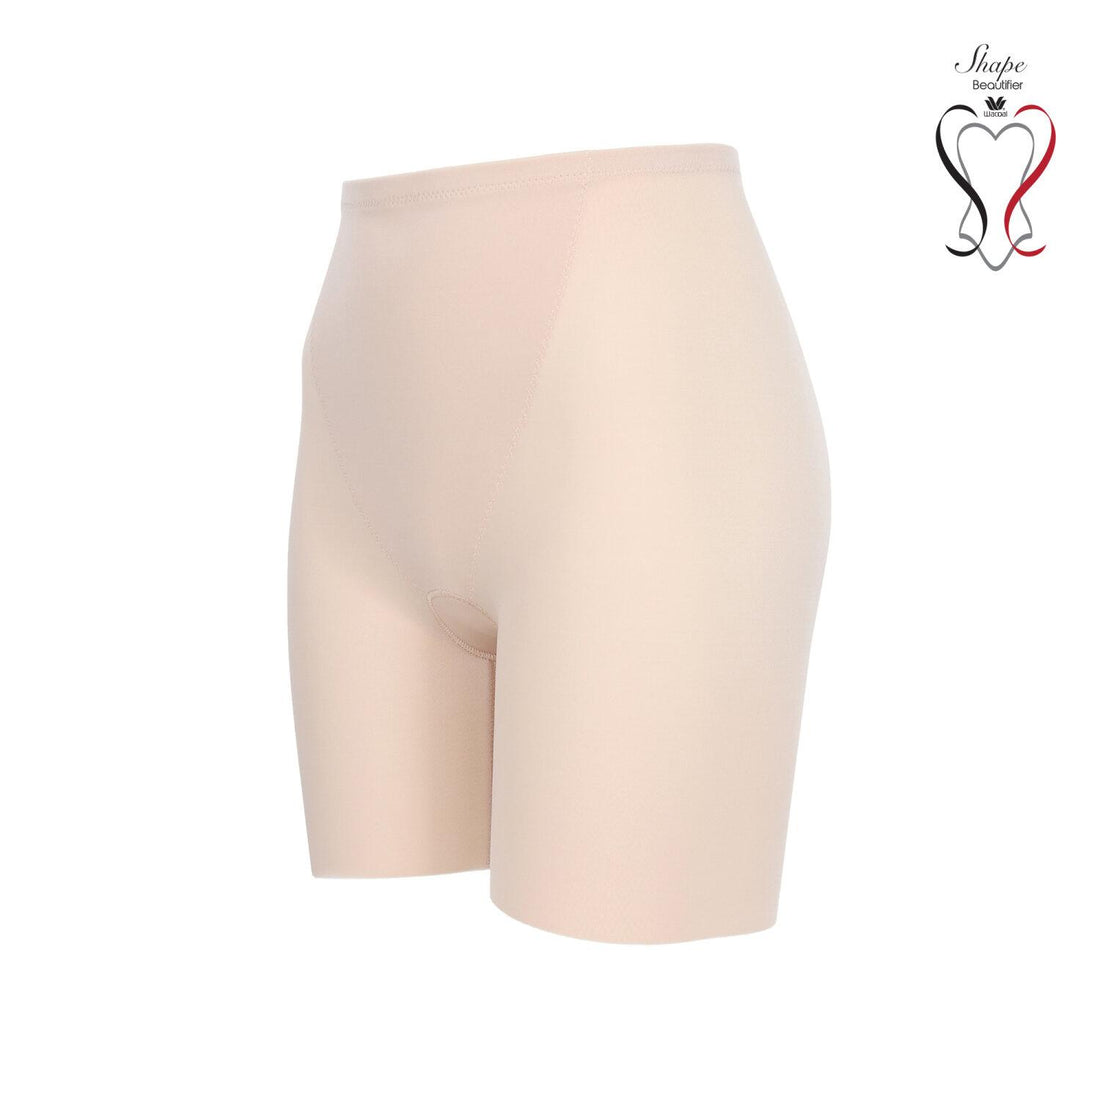 Wacoal Shapewear Hip กางเกงกระชับสัดส่วน ขายาวเอวปกติ รุ่น WY1152 สีเนื้อ (NN)